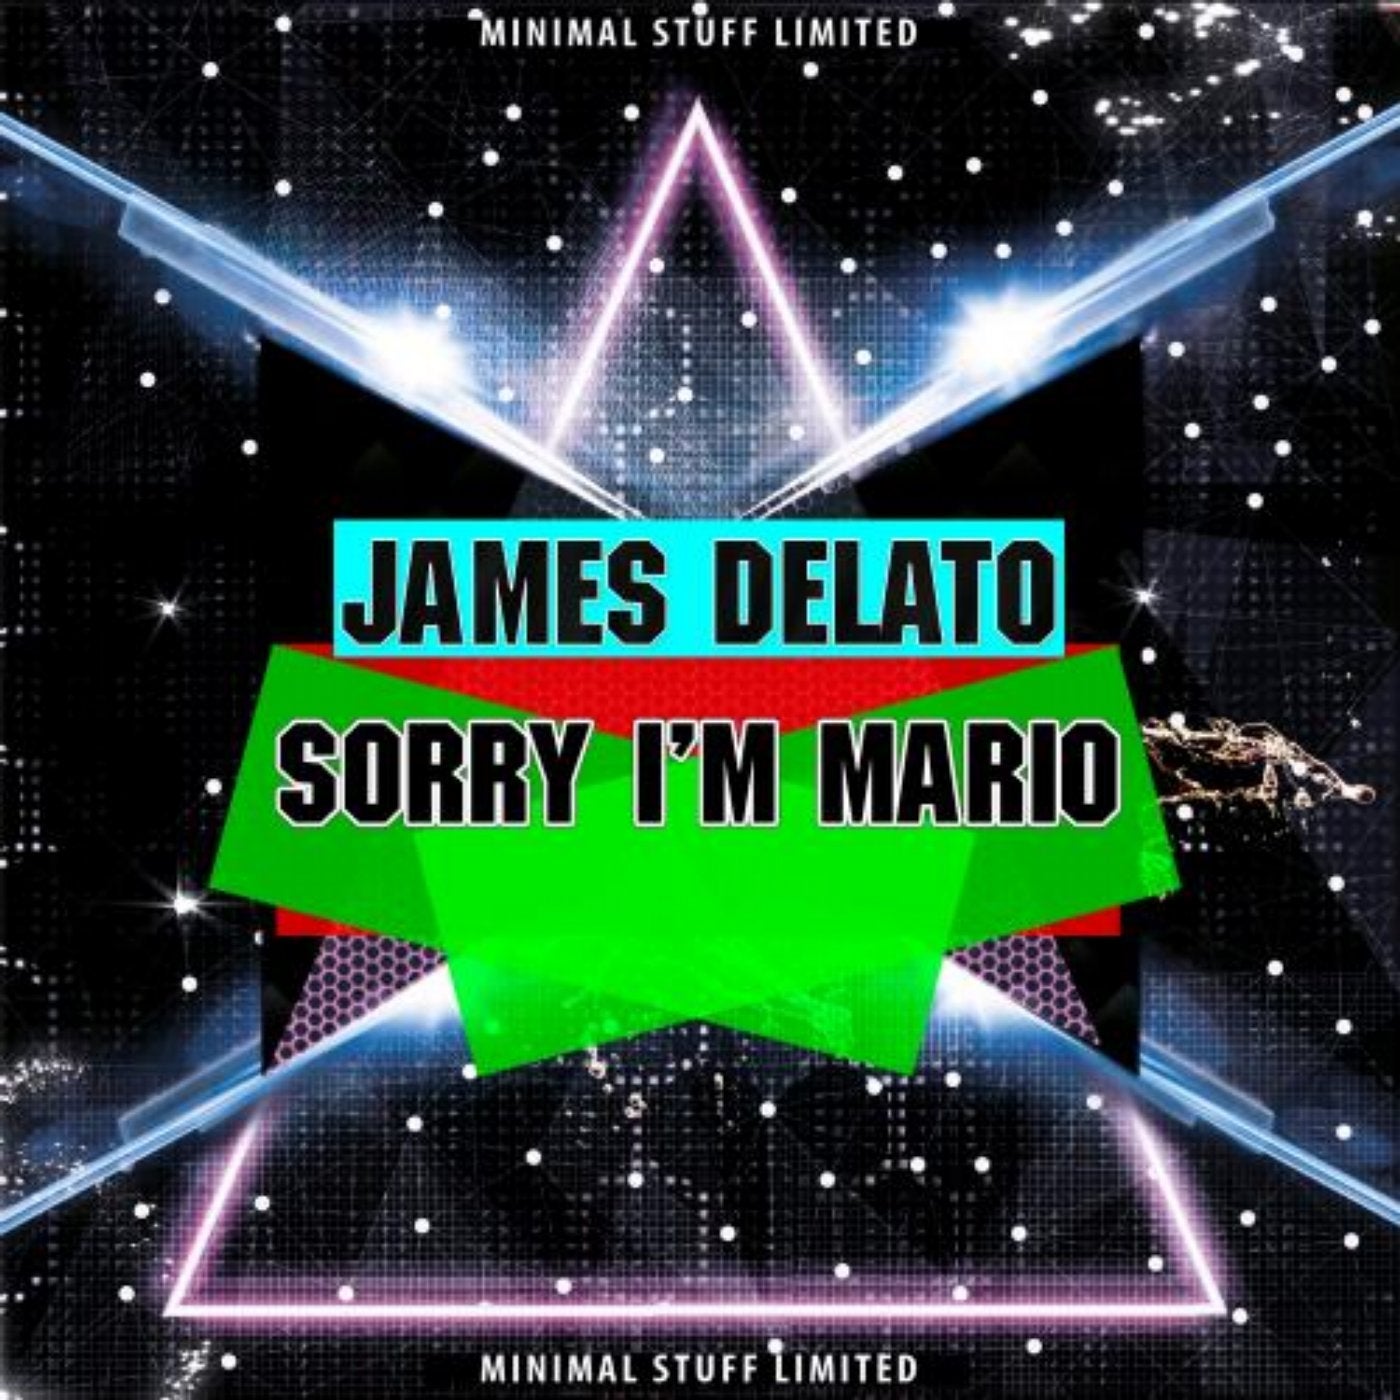 Sorry I'm Mario